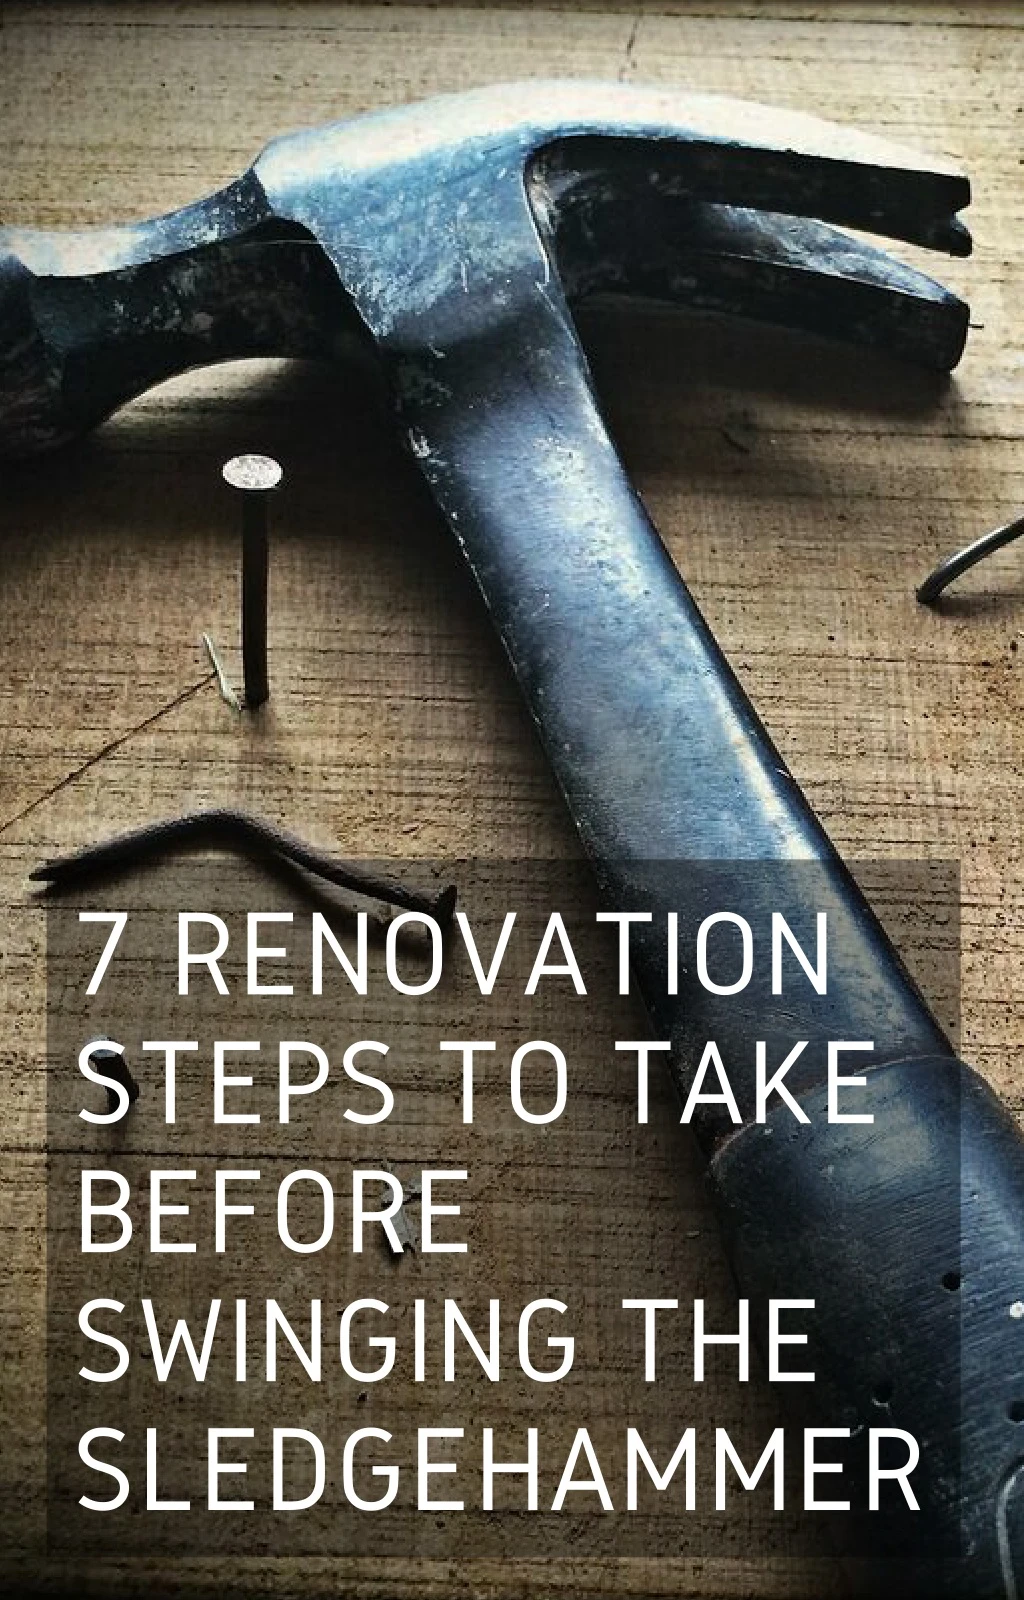 7 renovation steps to take before swinging